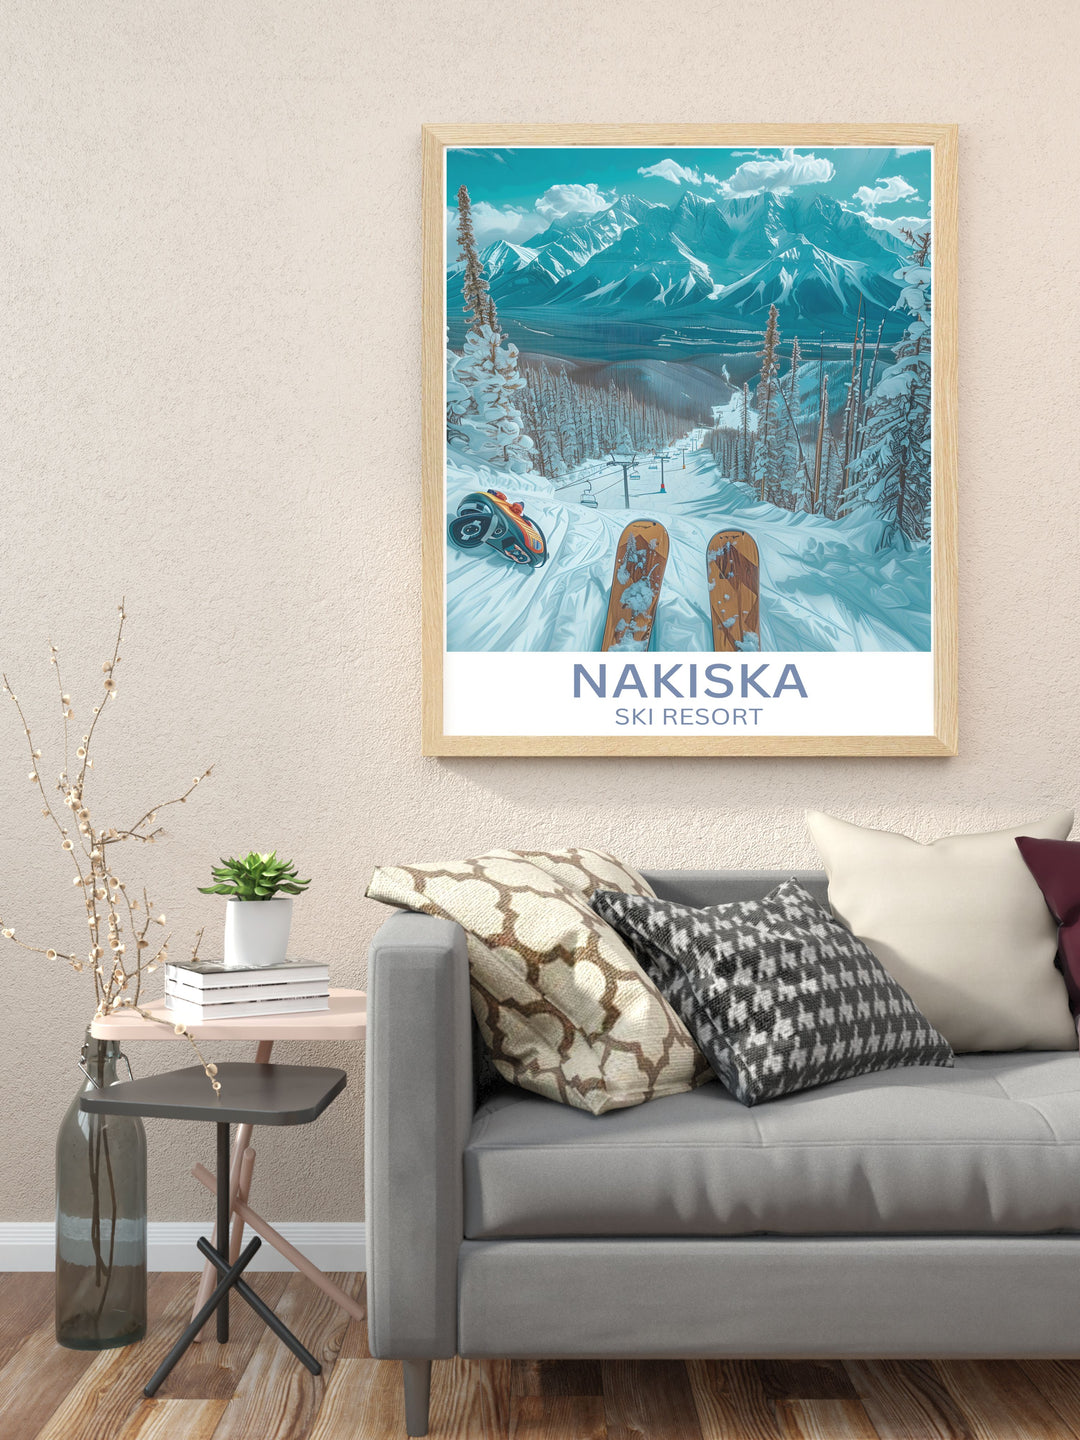 Detailed artwork of Nakiska Ski Resorts busiest slopes during peak season, perfect for a ski lodge decor.